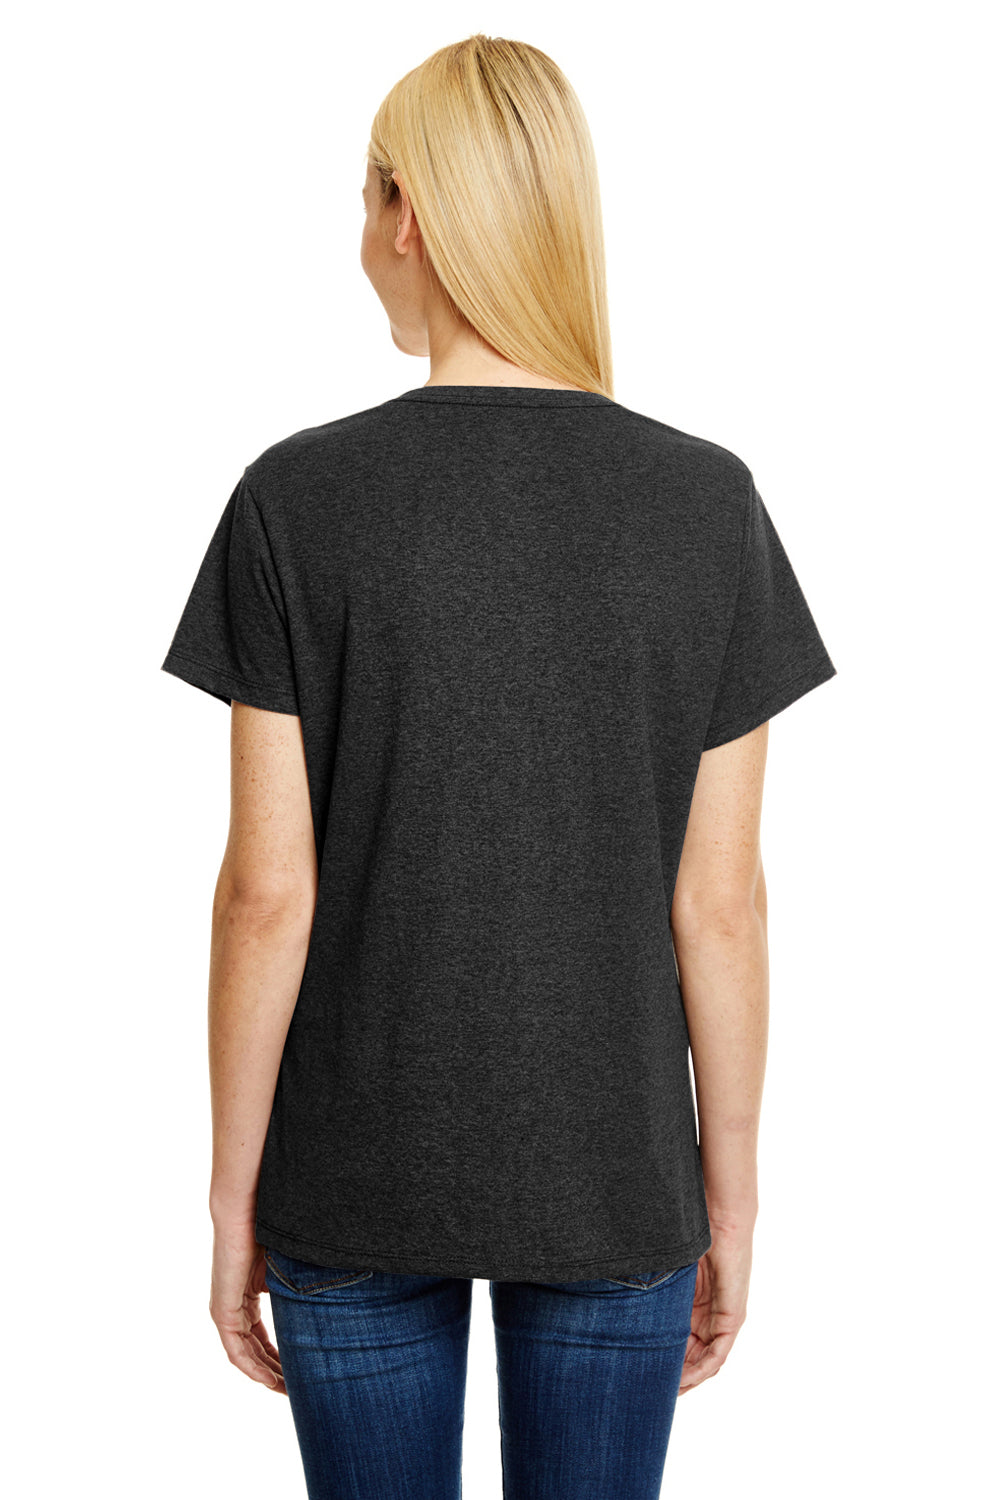 Hanes 42VT Womens X-Temp FreshIQ Moisture Wicking Short Sleeve V-Neck T-Shirt Black Back